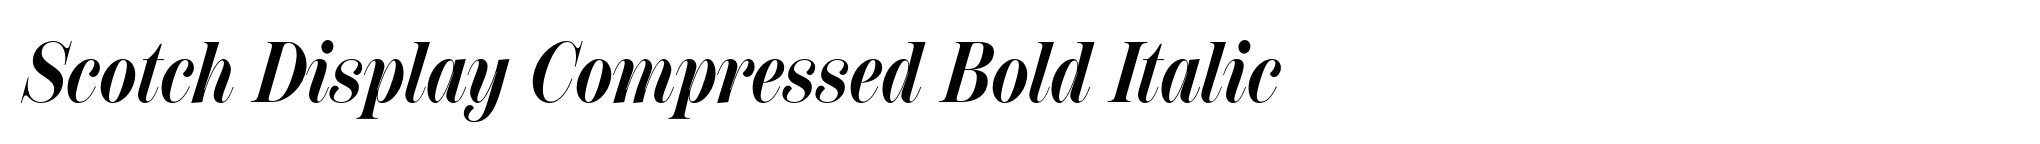 Scotch Display Compressed Bold Italic image